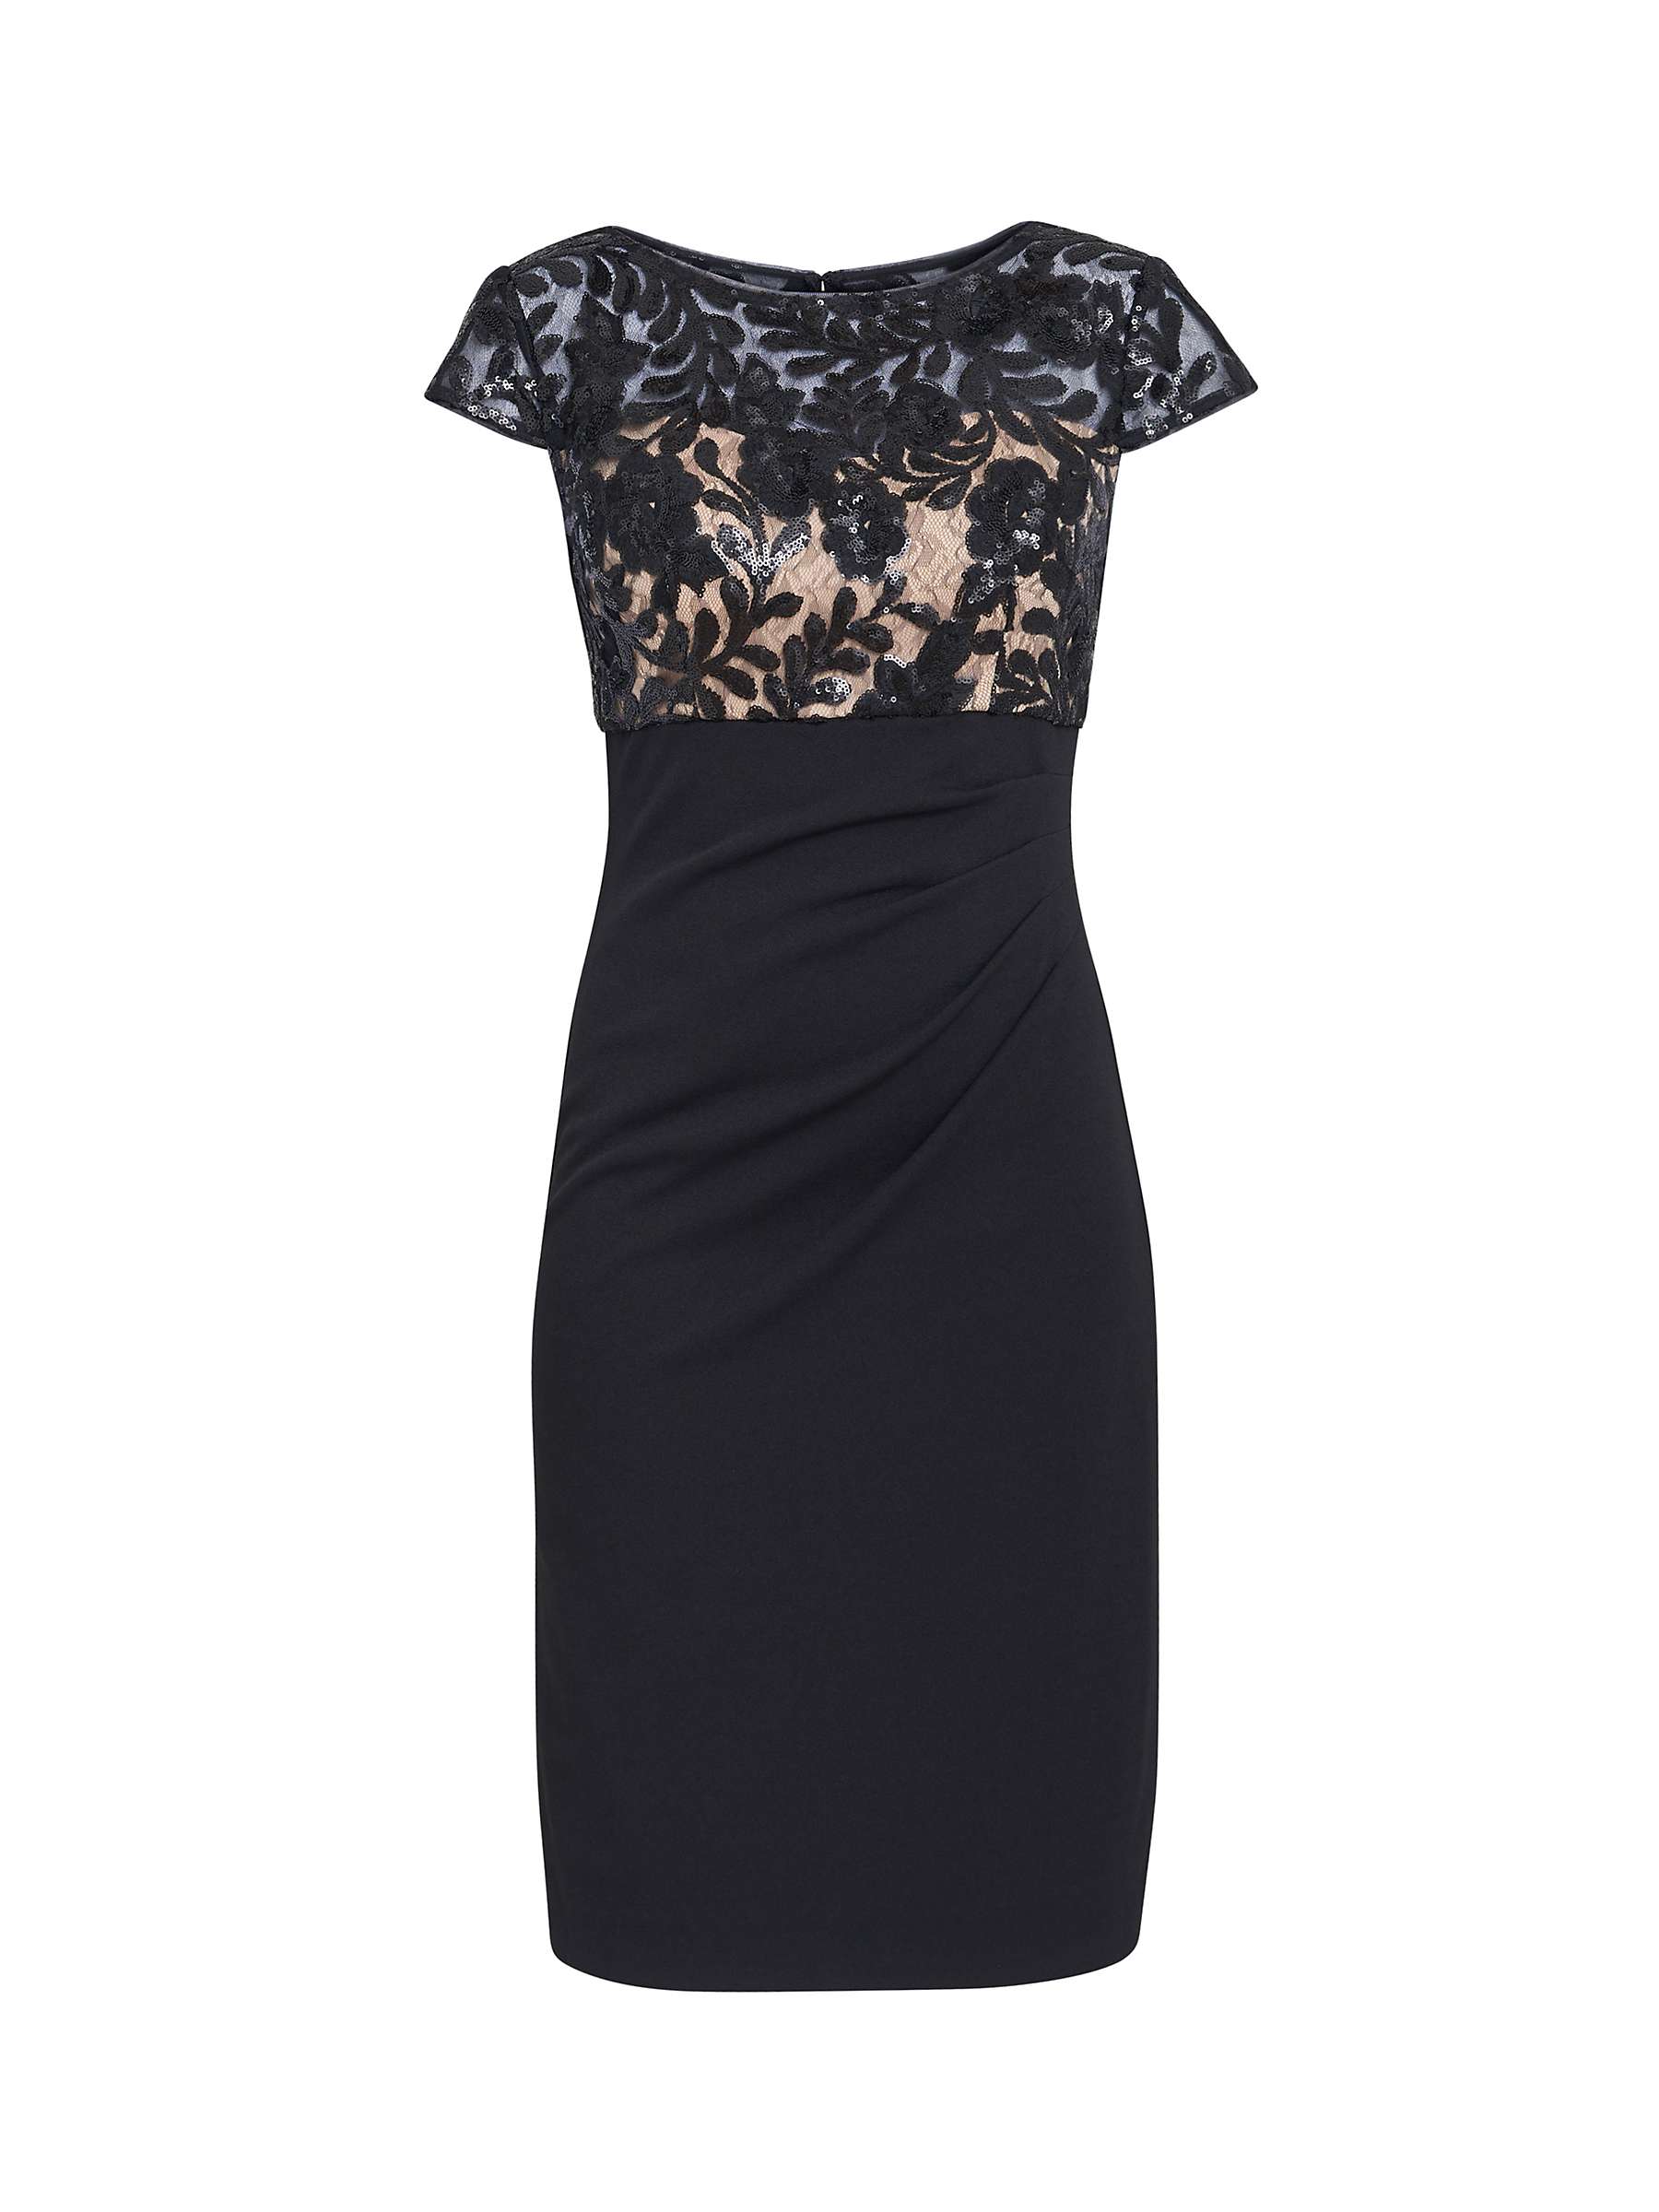 Buy Gina Bacconi Maddison Dress, Black Online at johnlewis.com